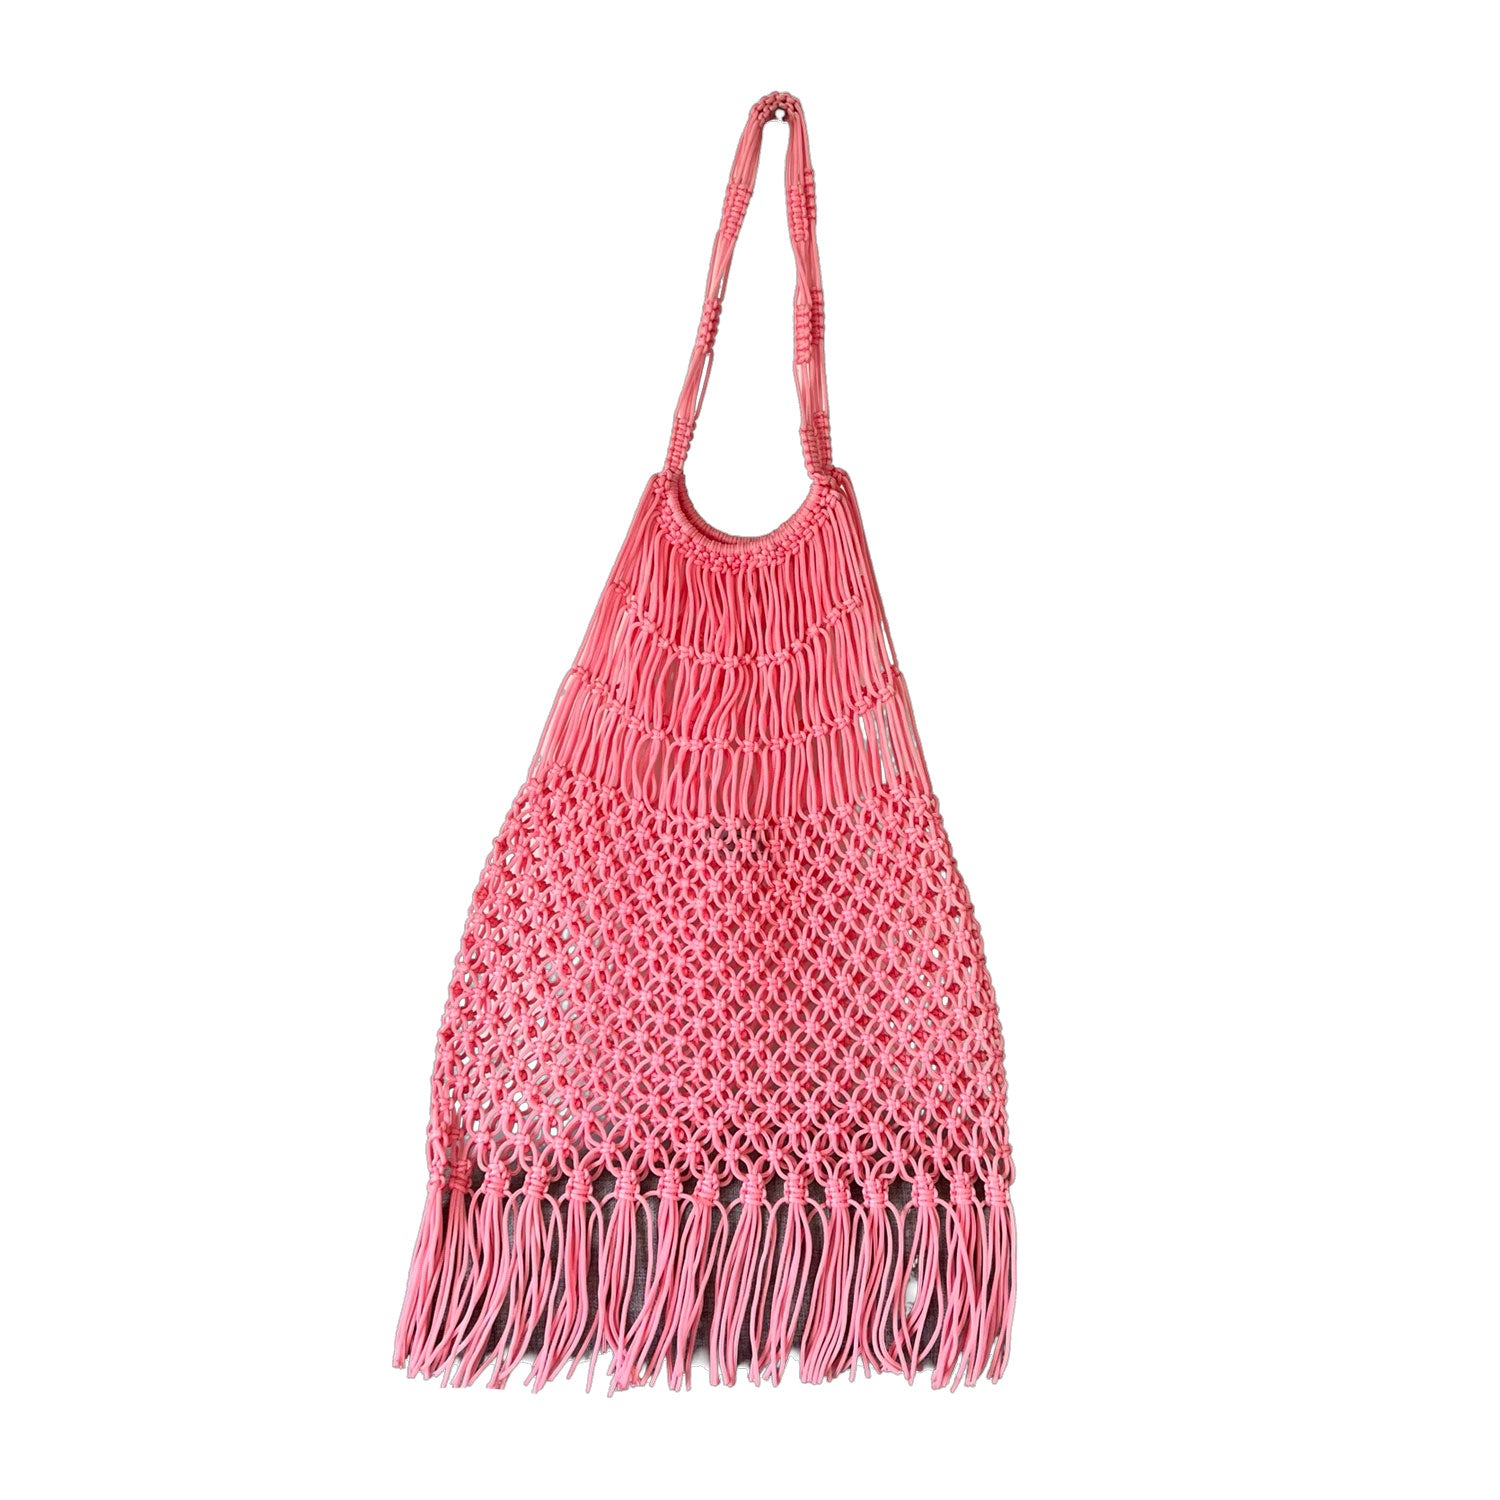 Crochet Fringes Handbag in Pink